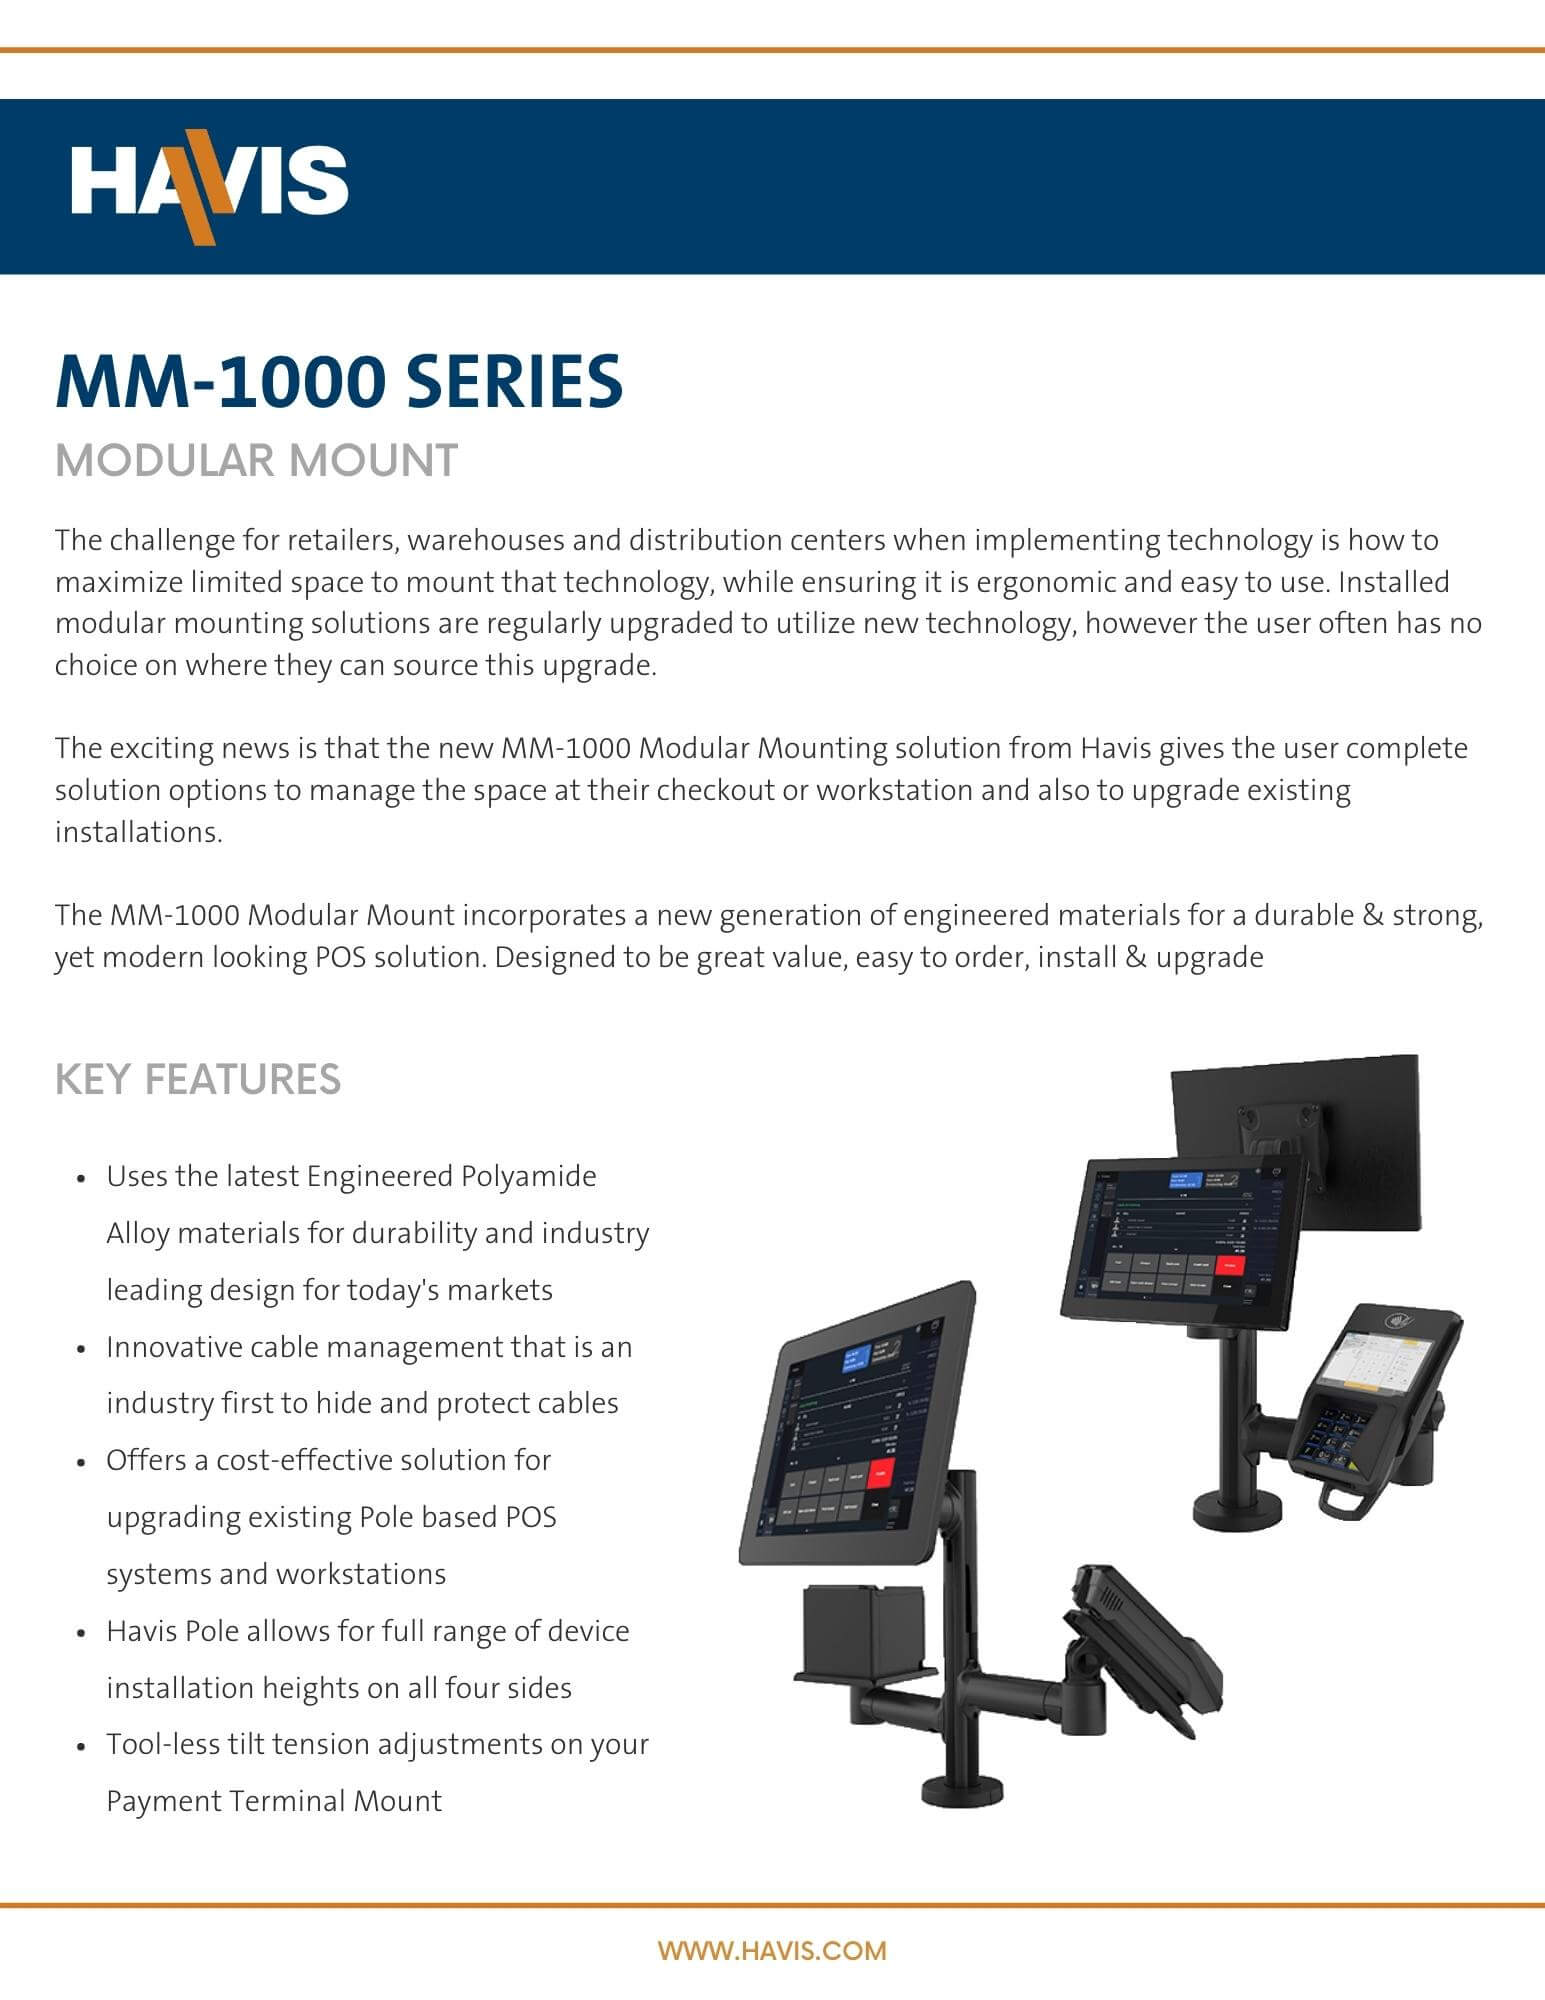 MM-1000 Series Datasheet